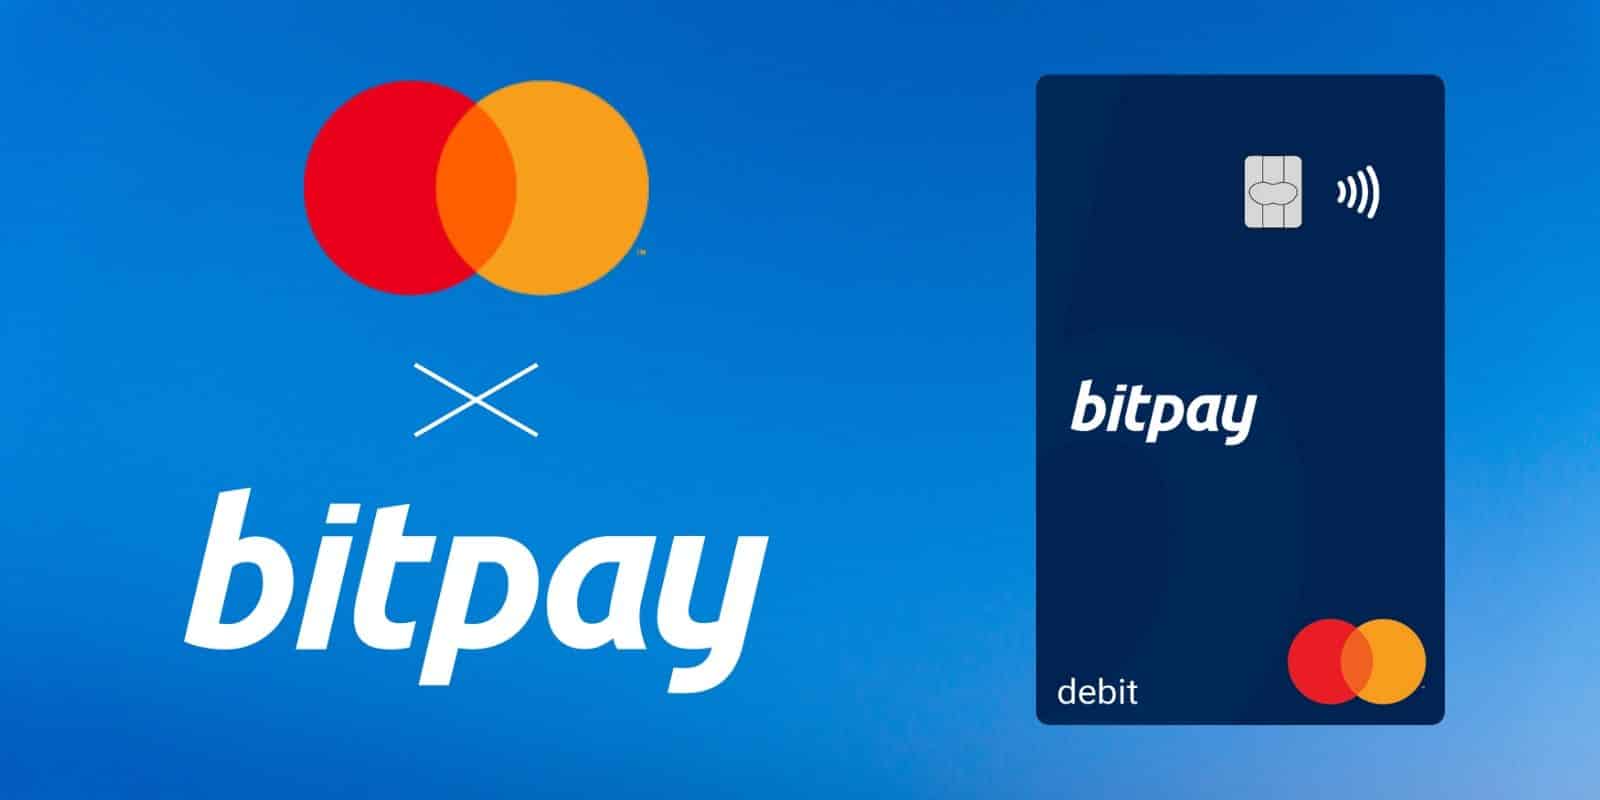 bitpay card fees